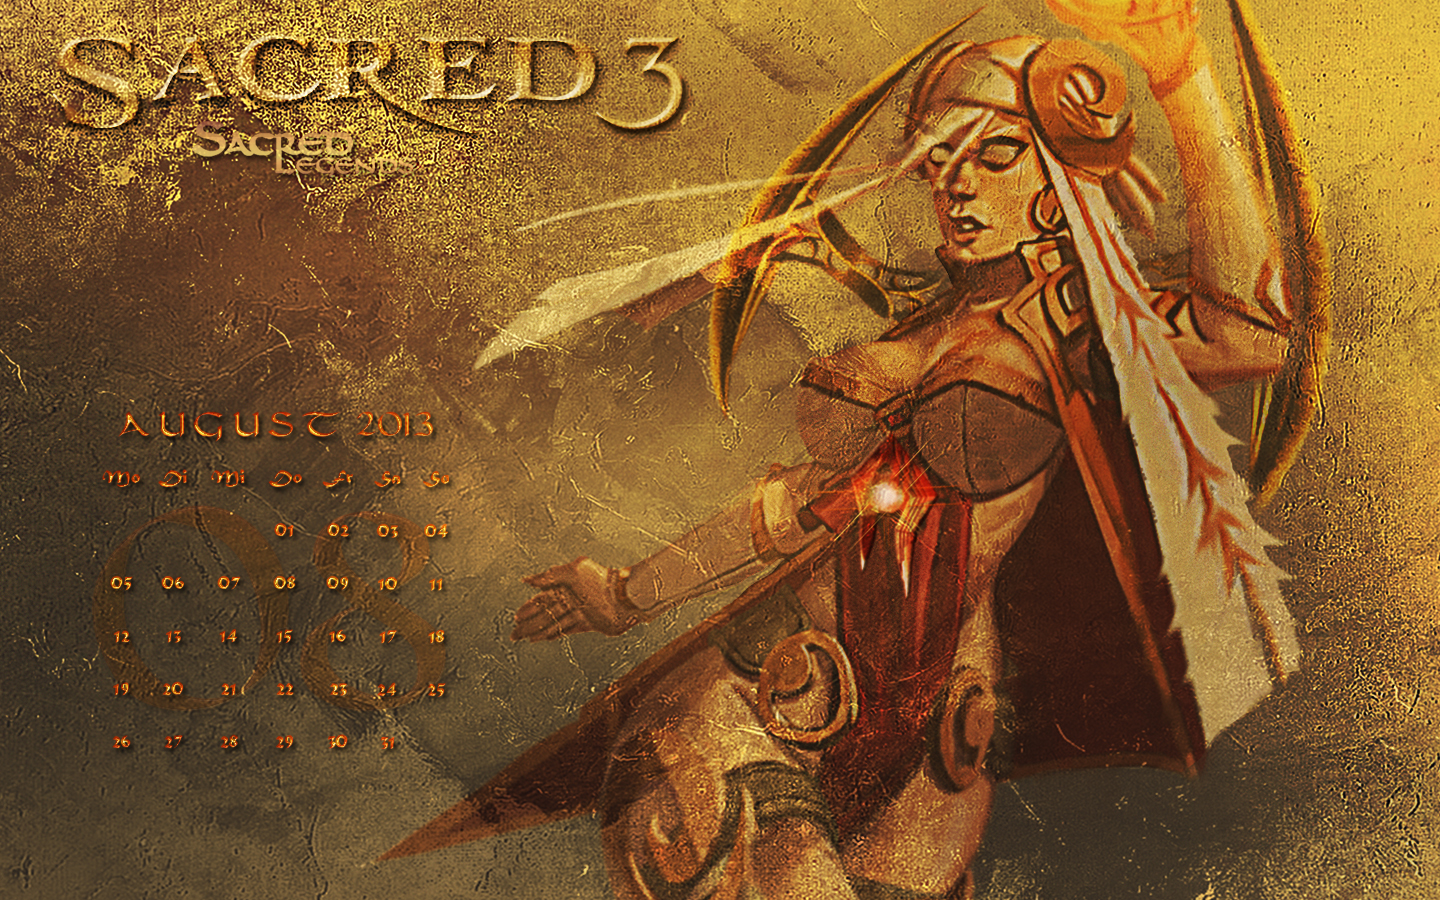 sacred_citadel_calendar_august2013_1440x900